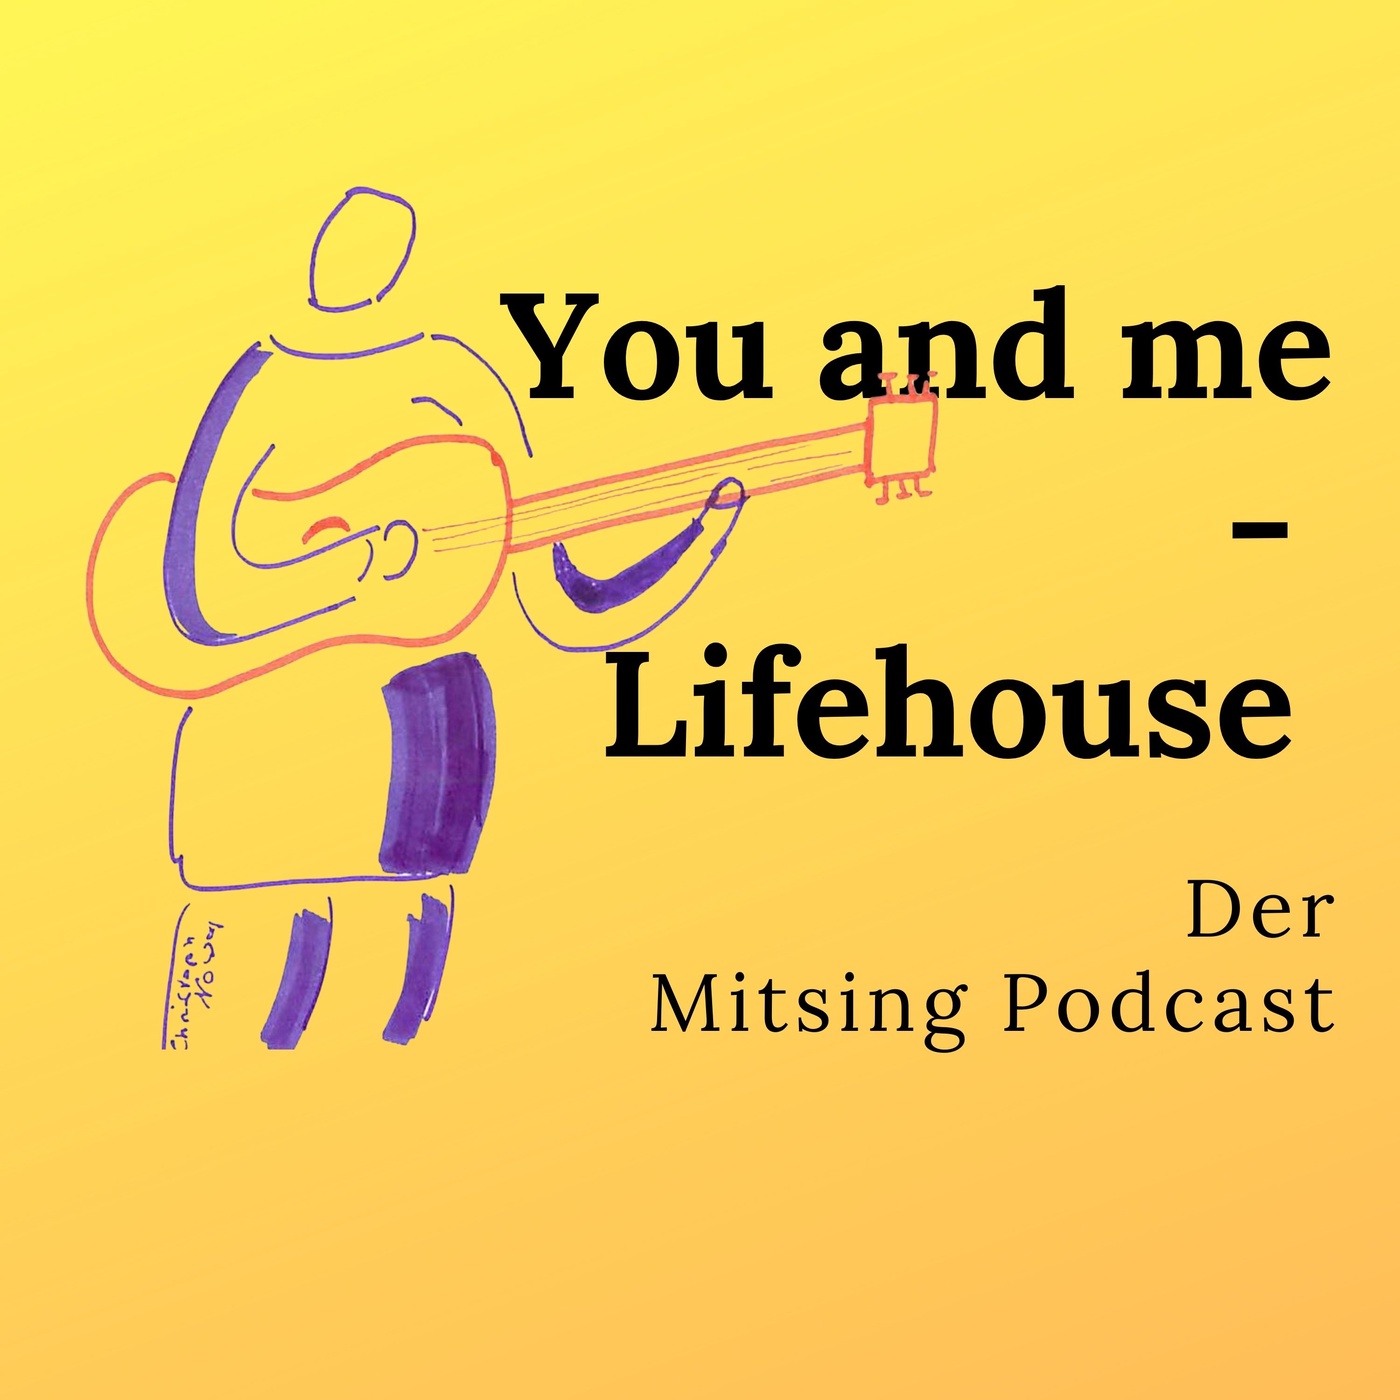 You and me von Lifehouse